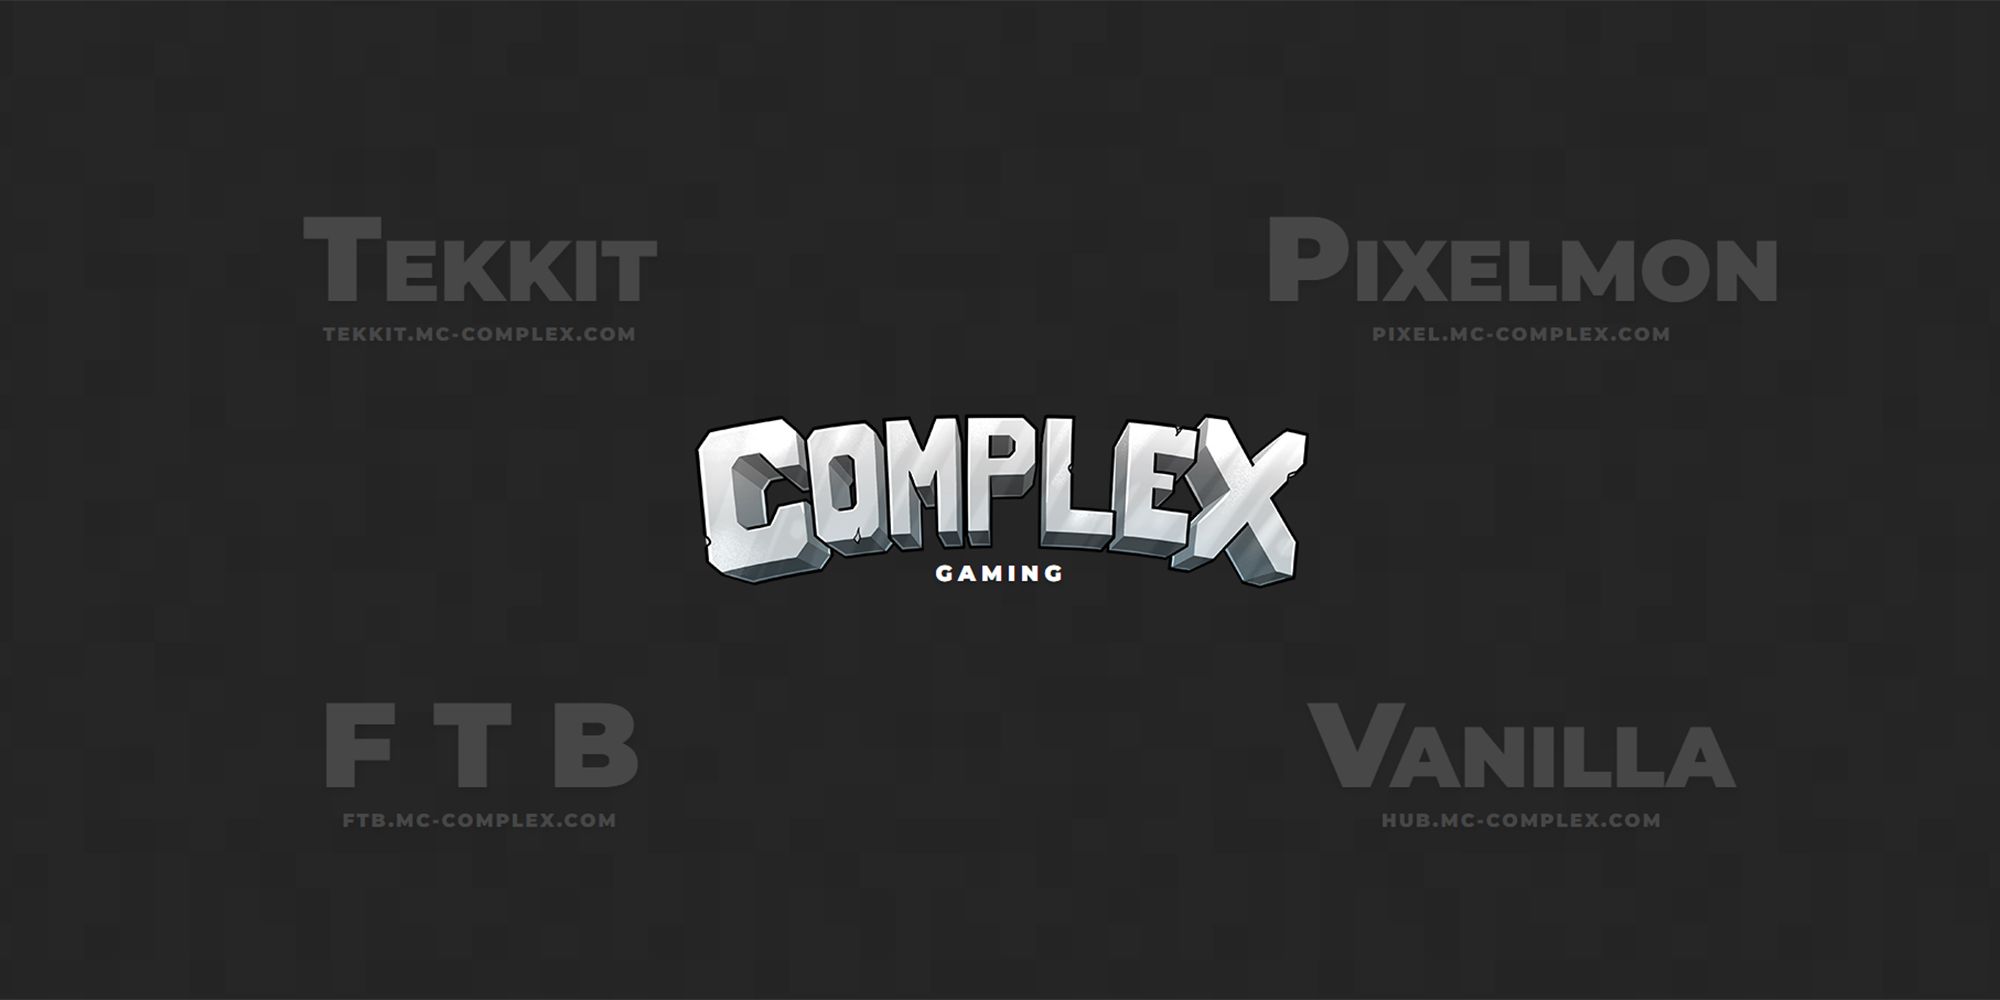 complex gaming featuring tekkit, pixelmon, ftb, and vanilla servers